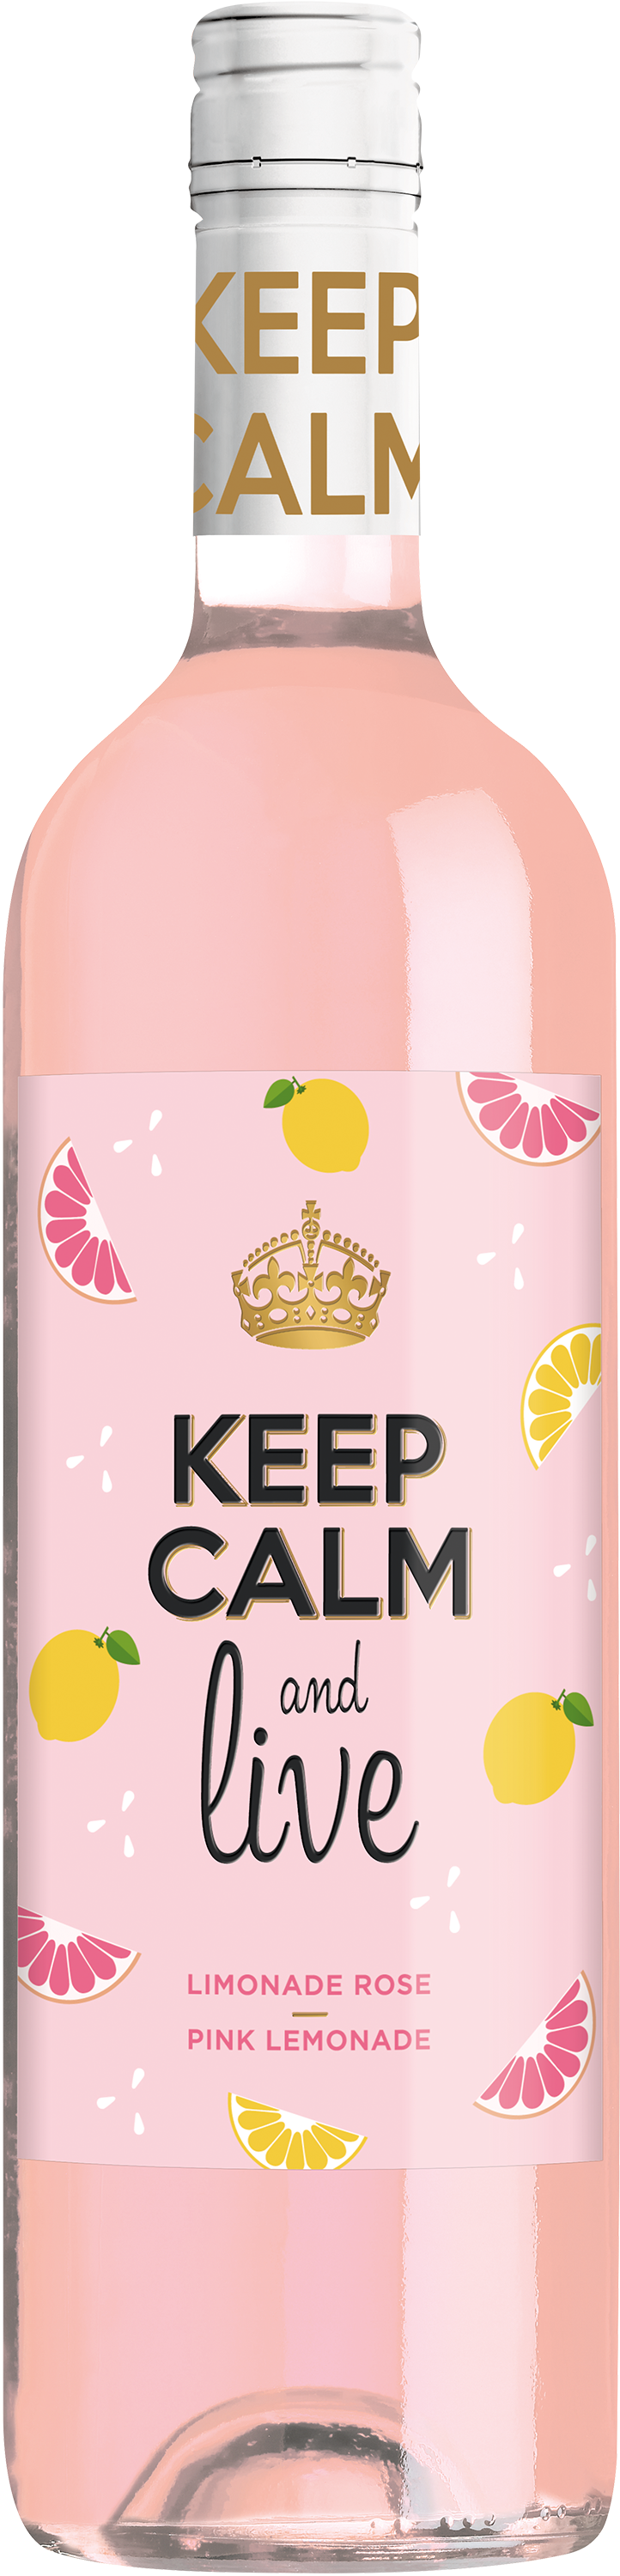 Keep Calm and Live Pink Lemonade